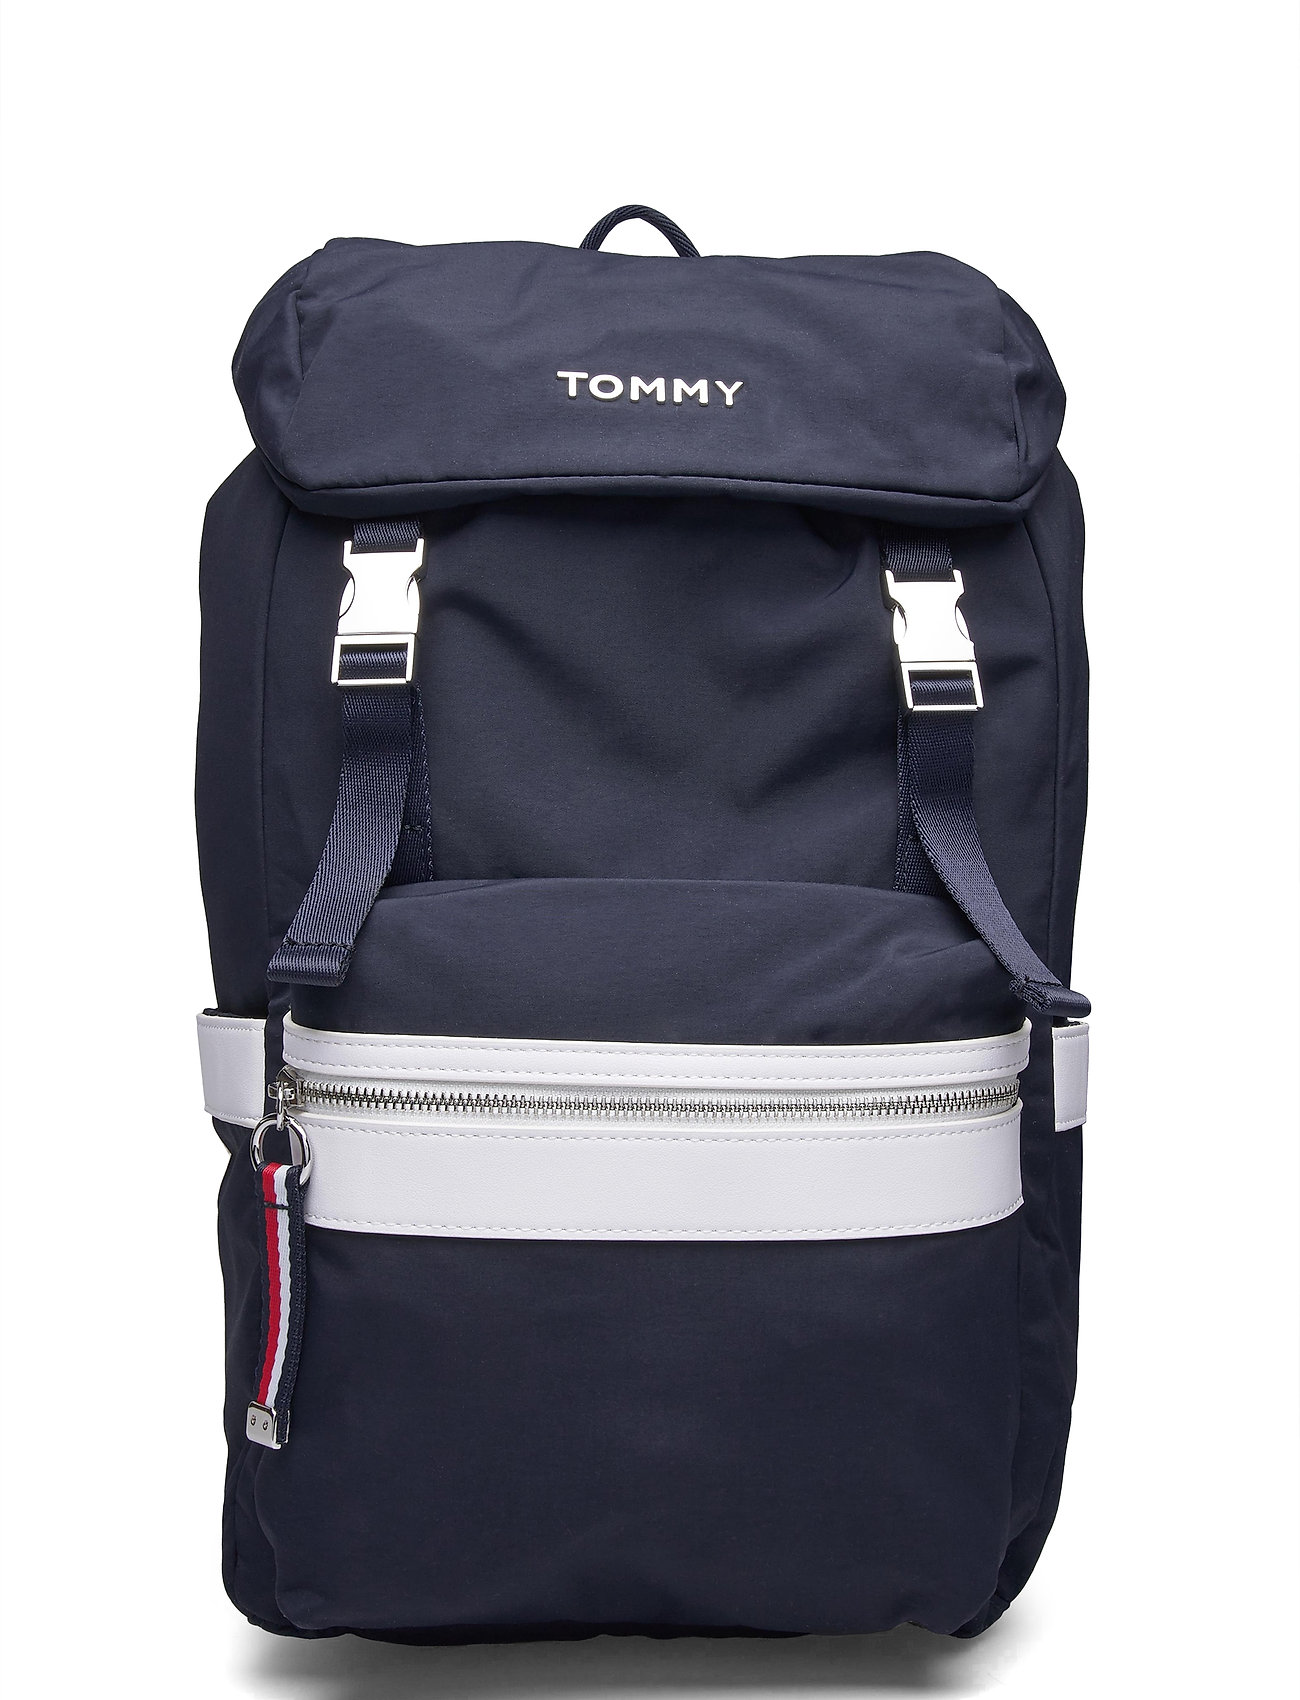 SKY CAPTAIN/WHITE Tommy Hilfiger Nylon Backpack Backpacks Backpacks Blå Tommy Hilfiger rygsække dame - Pashion.dk